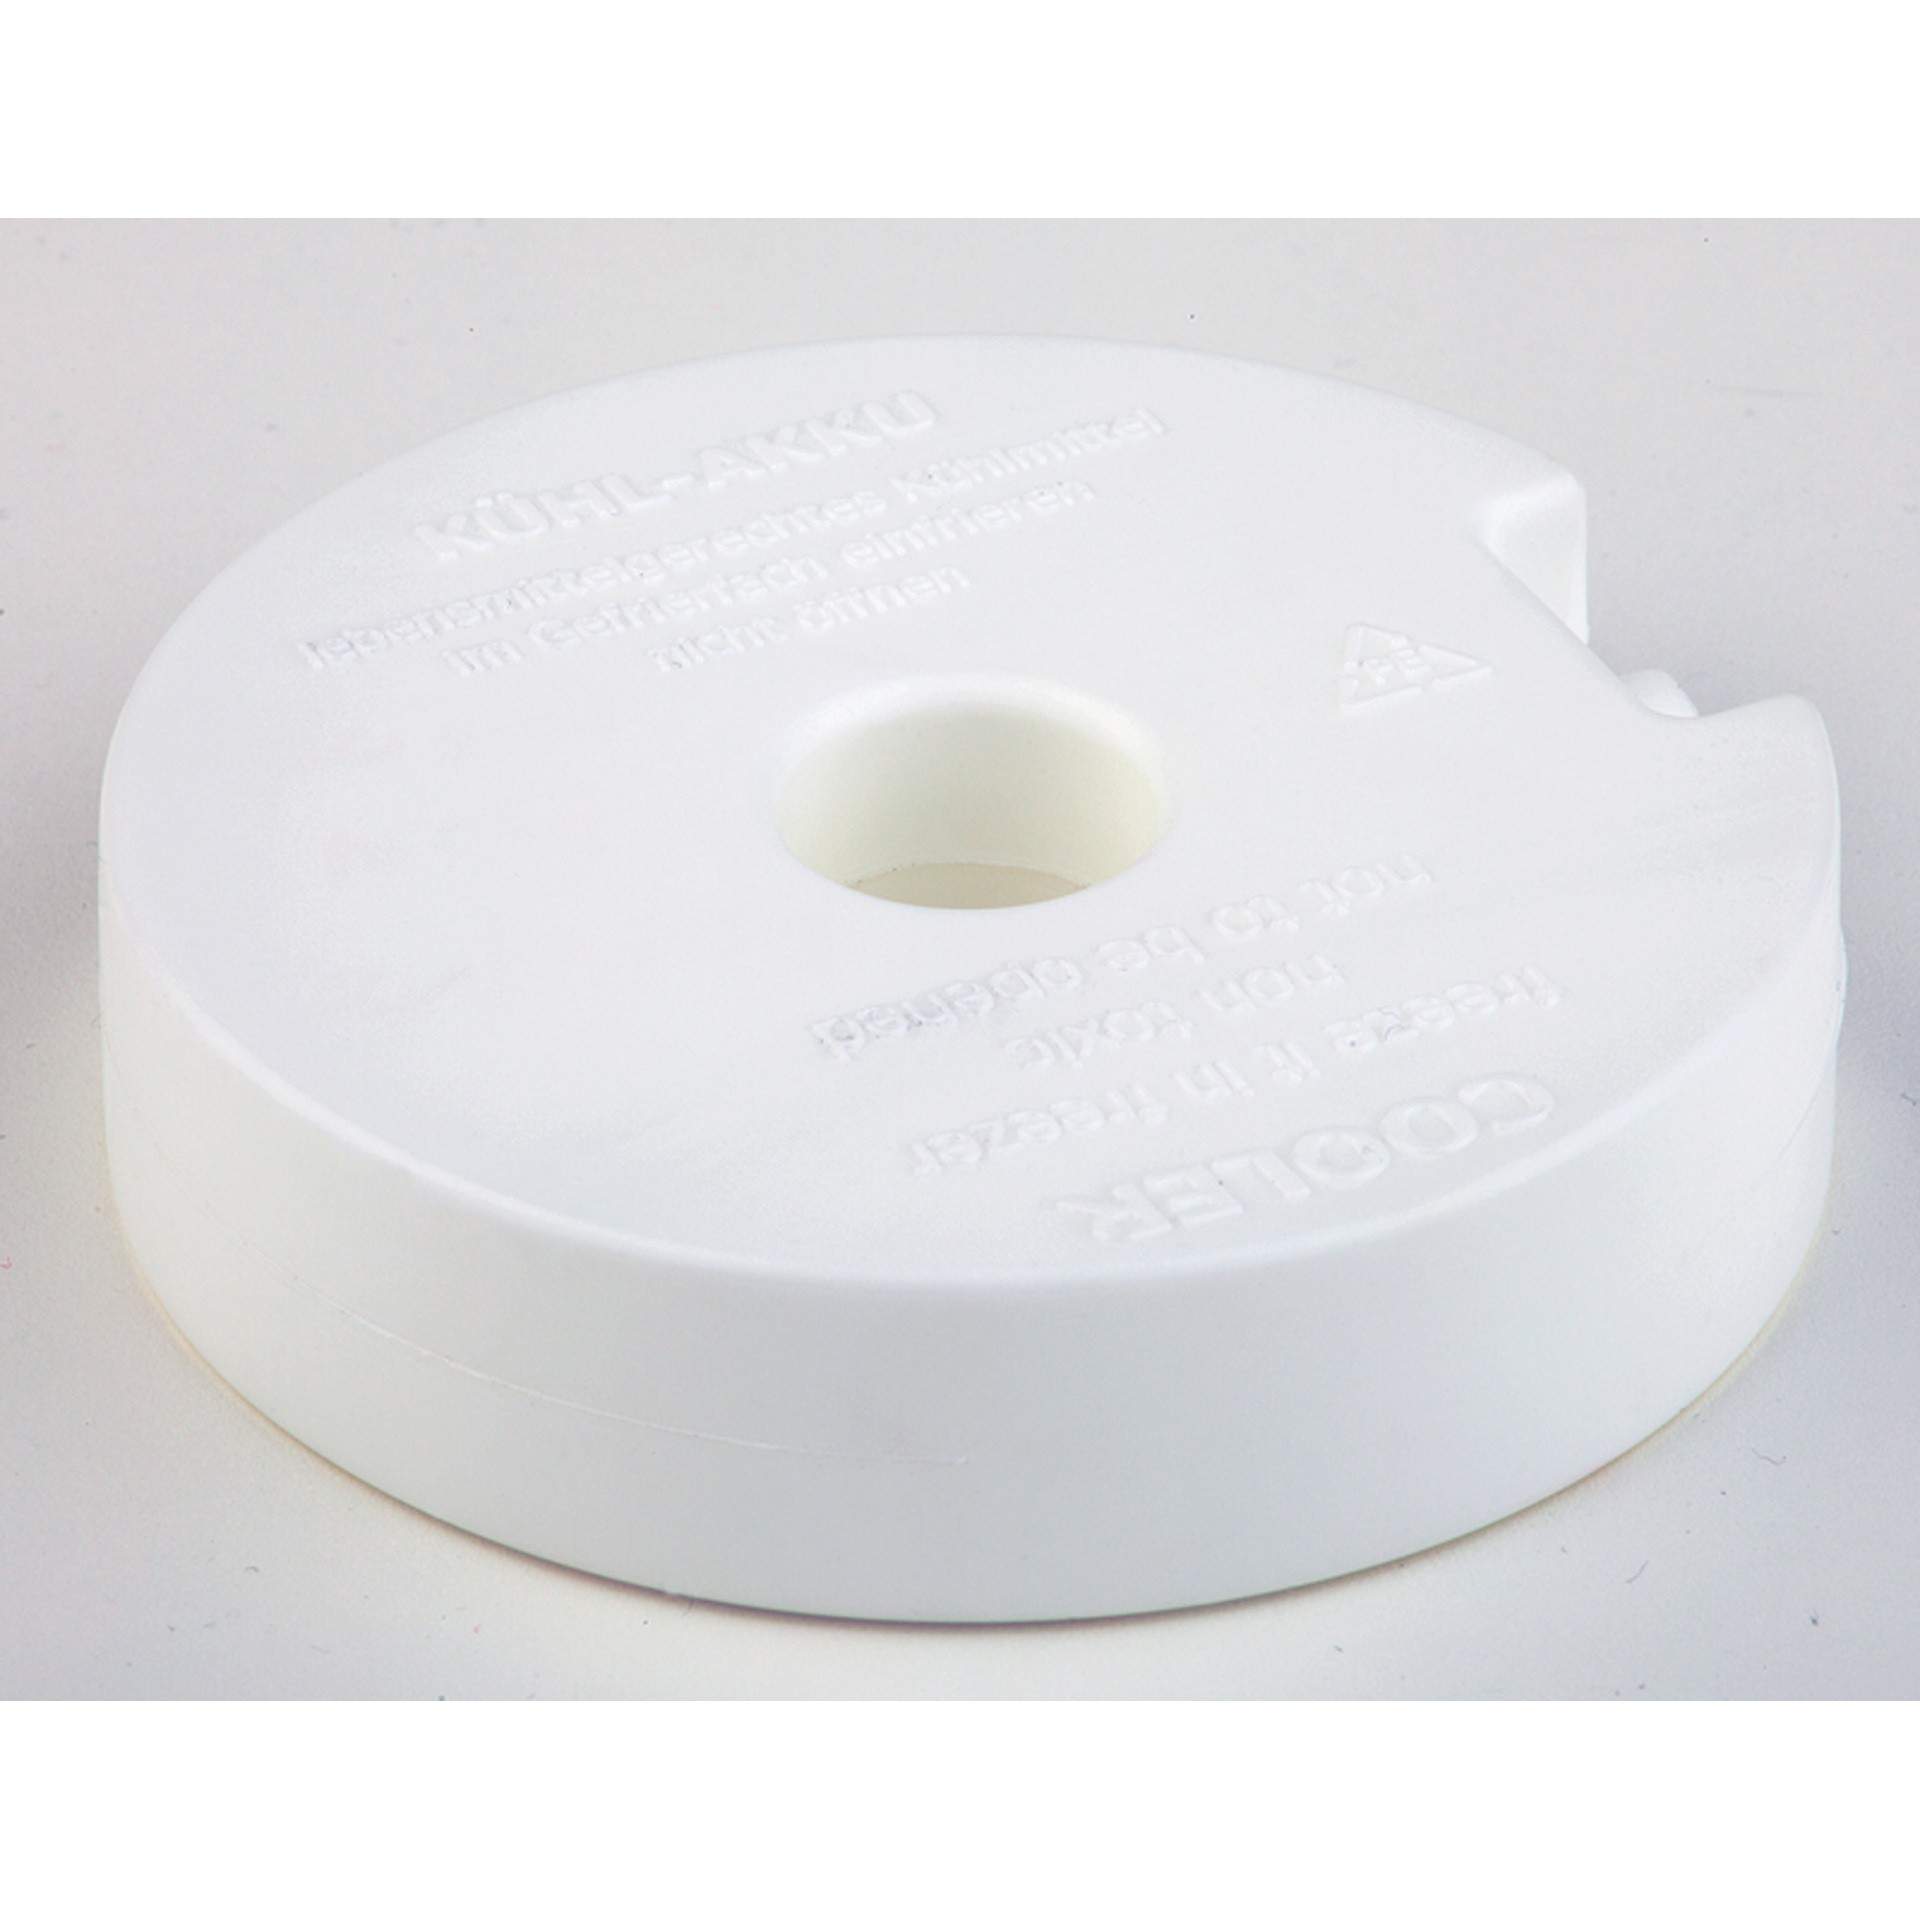 Kühlakku - gefüllt mit Kühlflüssigkeit - weiß - Abm. 2,5 cm - Ø 10,5 cm - Kunststoff - 10781-B